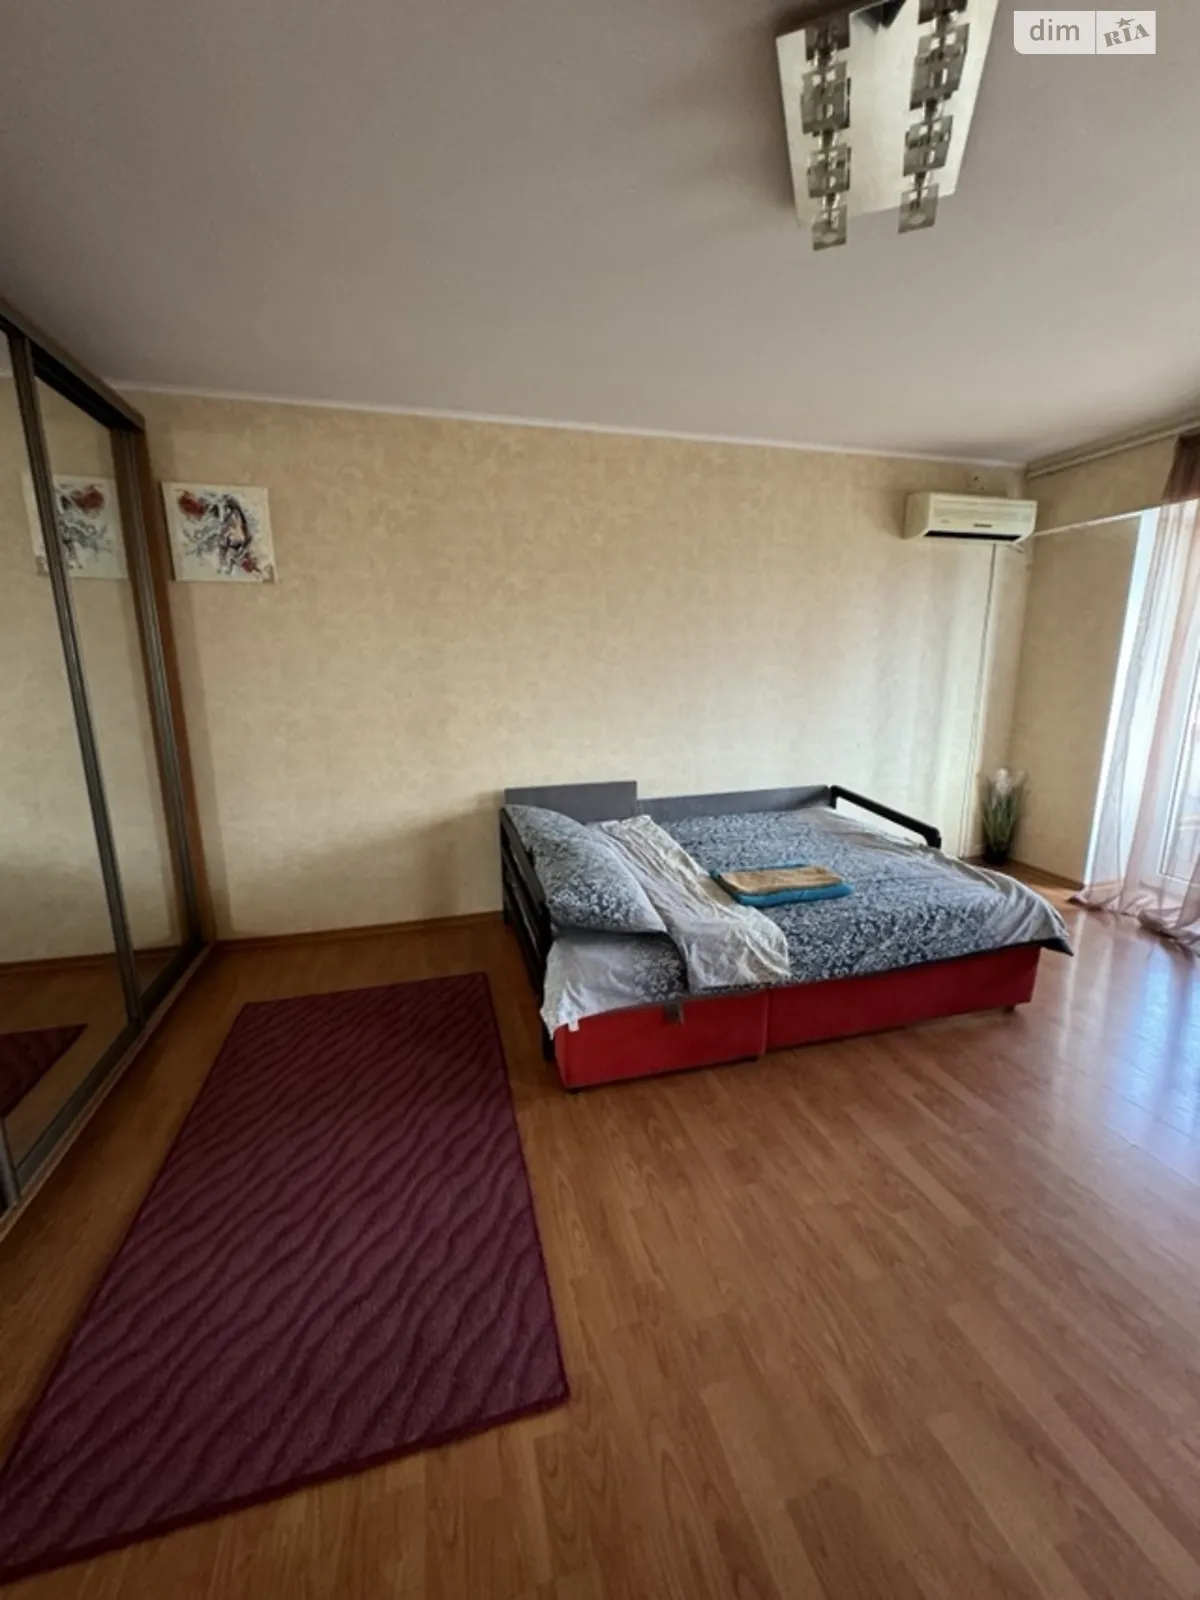 1-кімнатна квартира у Запоріжжі, цена: 1000 грн